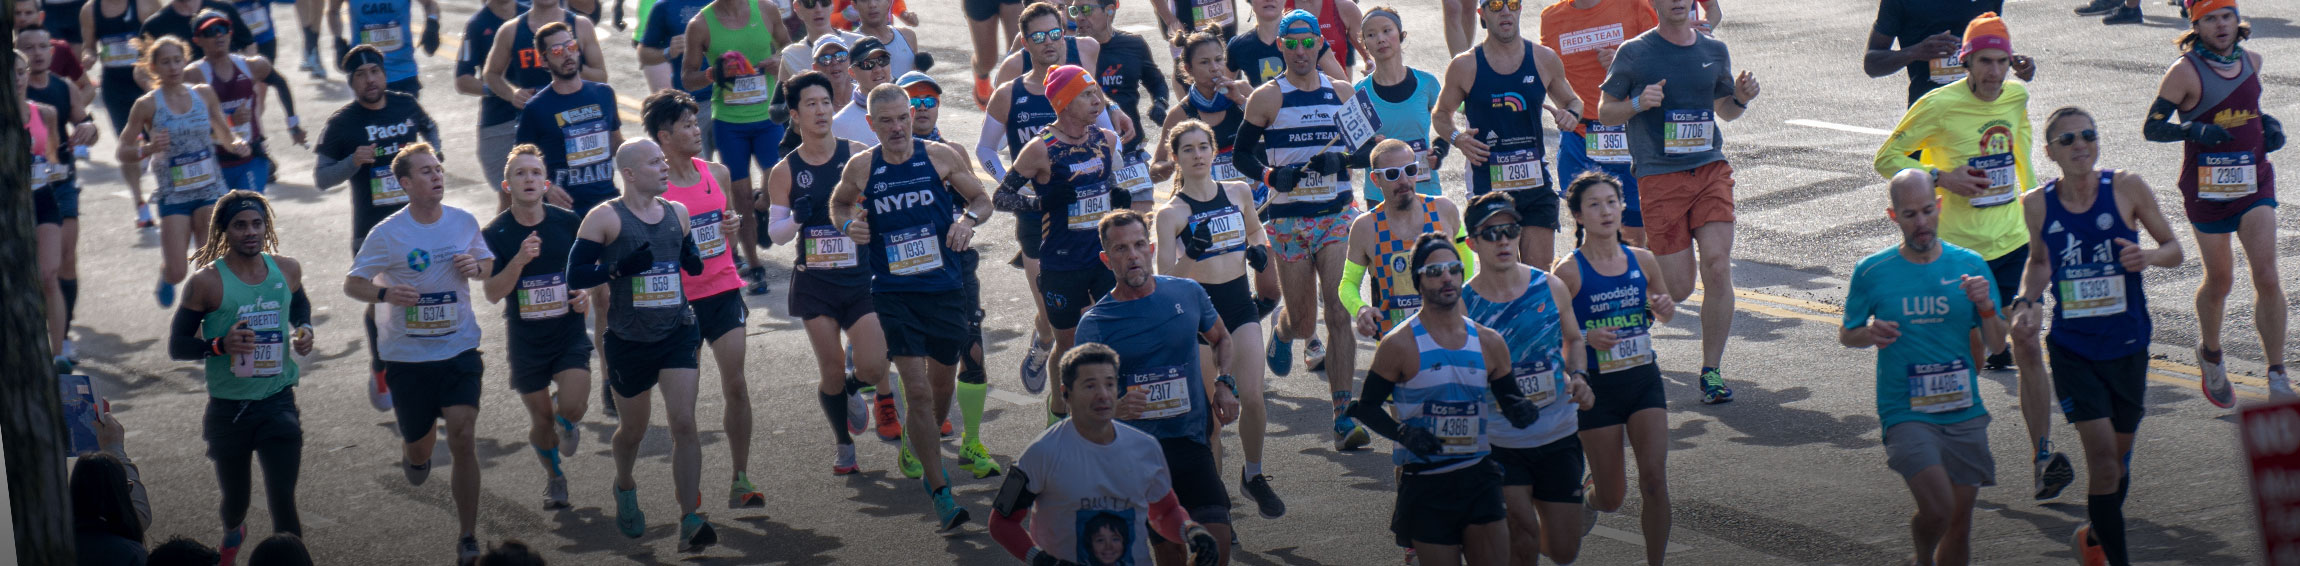 Open Access BPO Renews Charity Support, Sends Employee to NYC Marathon